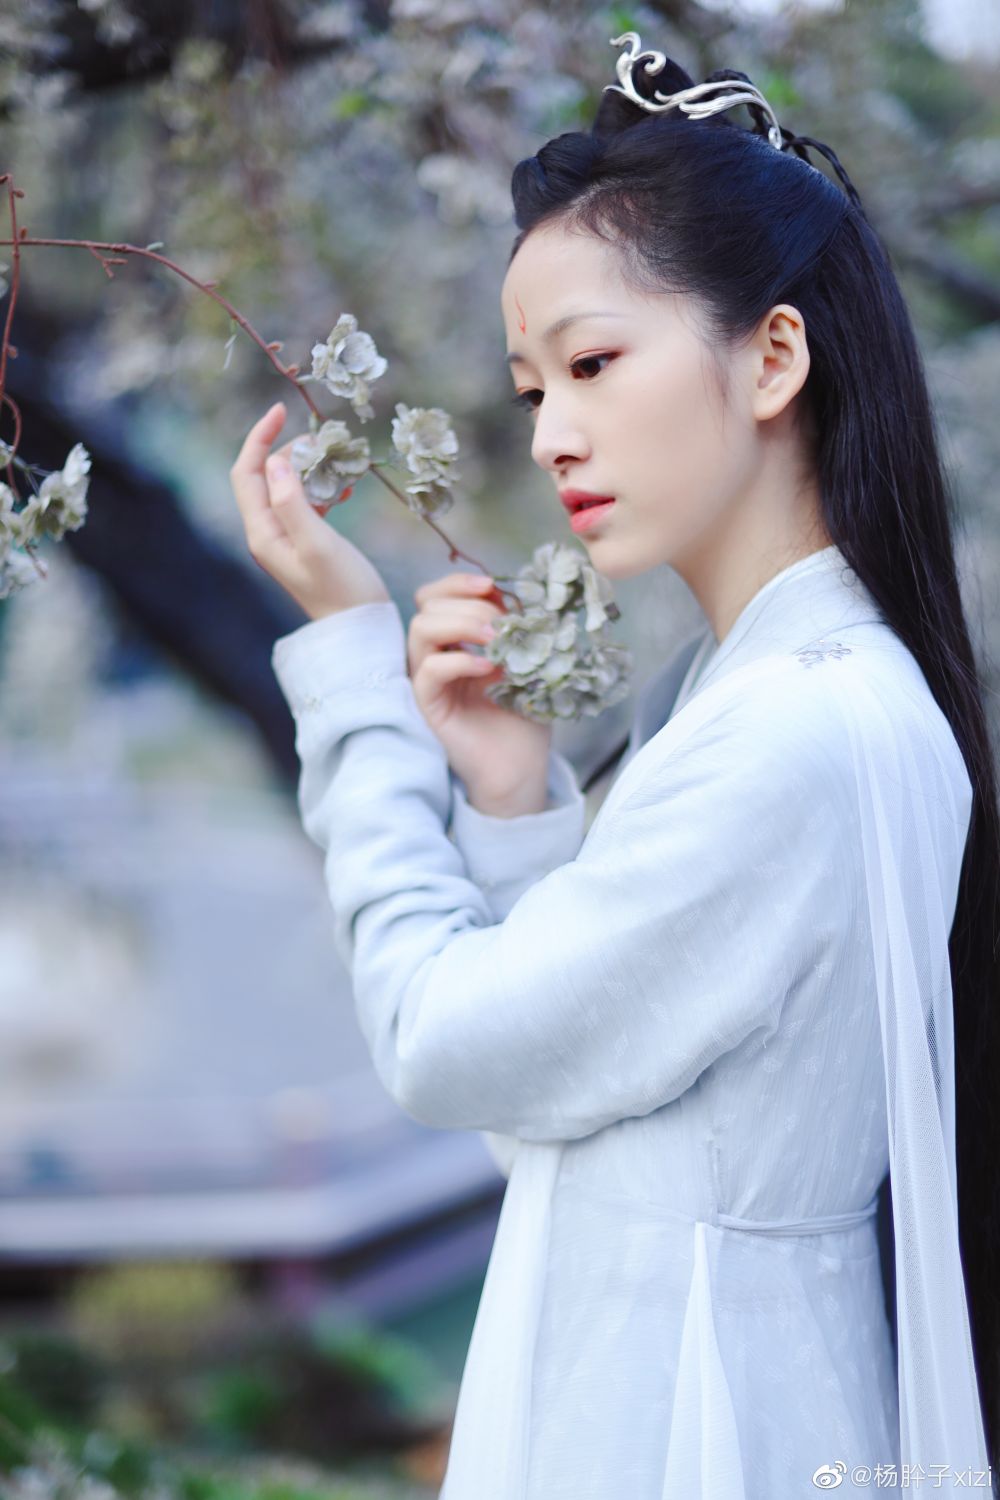 Xizi Yang Sexy and Hottest Photos , Latest Pics